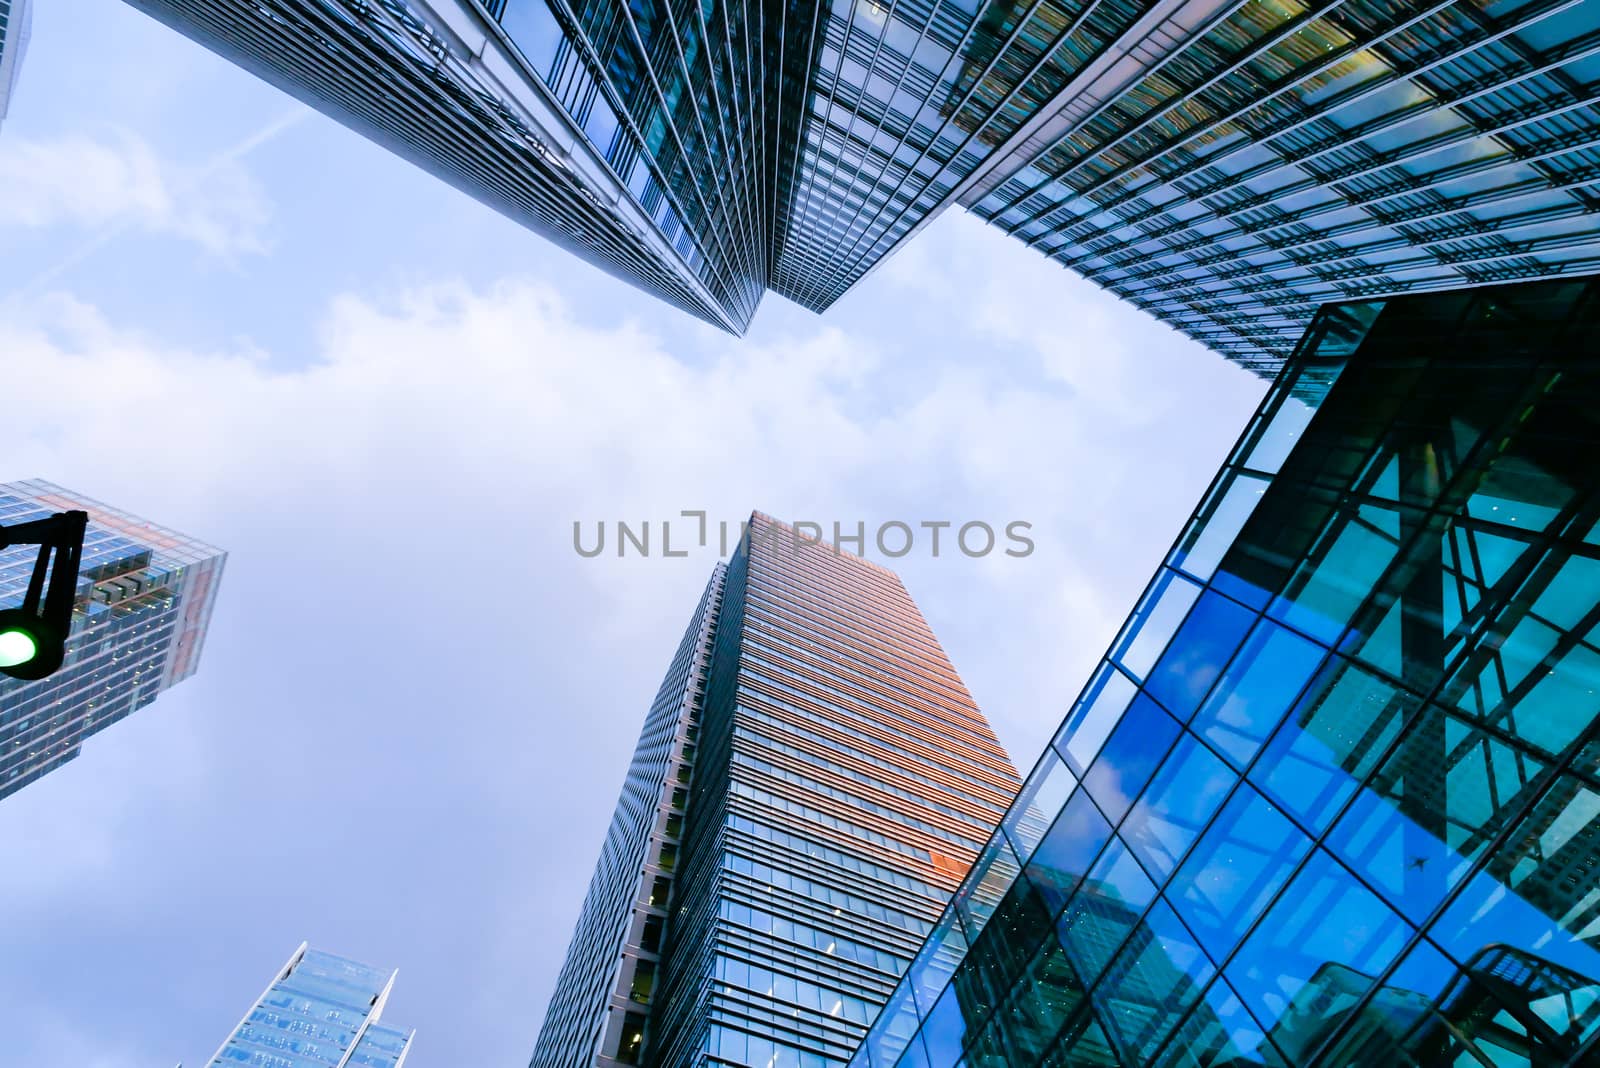 London office building skyscraper, working & meeting